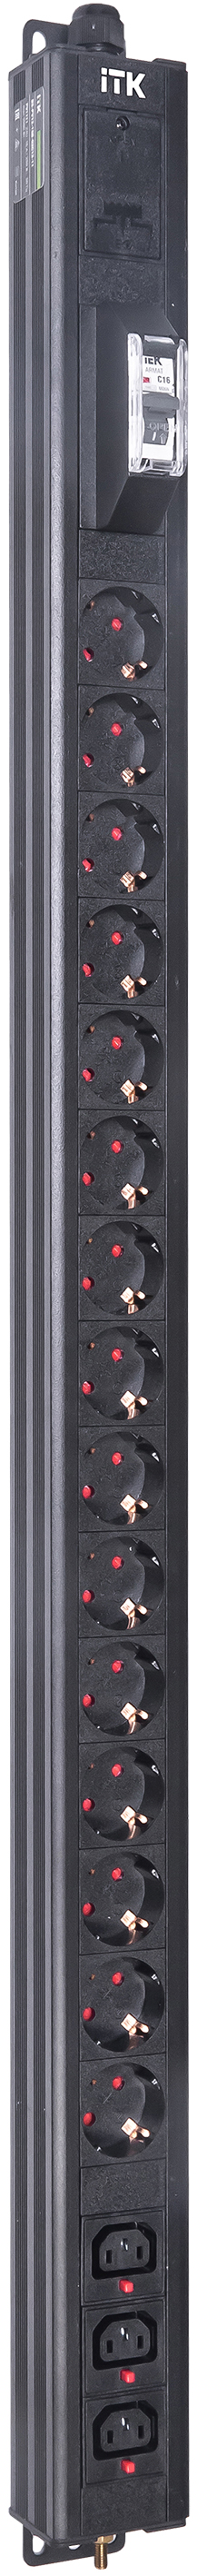 ITK BASE PDU вертикальный PV1111 24U 1 фаза 16А 15 розеток SCHUKO (немецкий стандарт) + 3 розетки C13 кабель 2,6м вилка SCHUKO (немецкий стандарт)